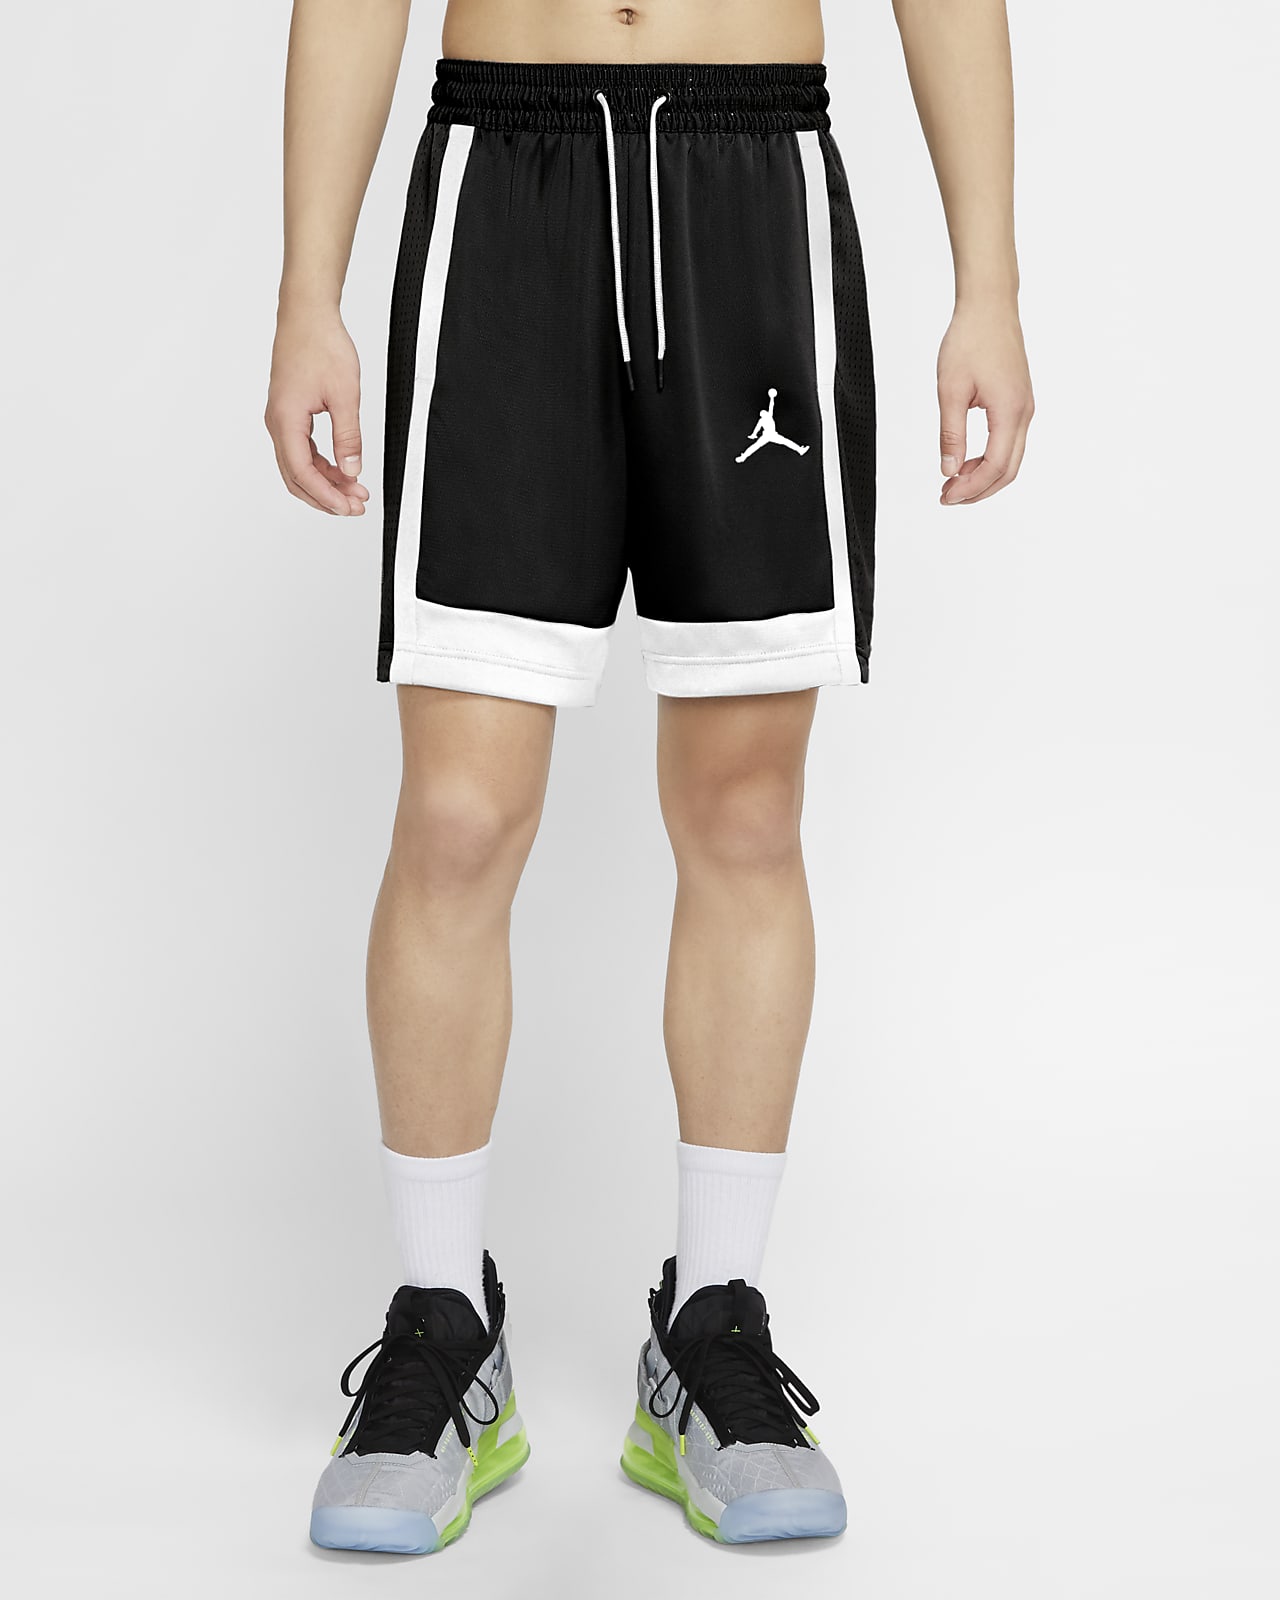 Jordan Air Men's Basketball Shorts. Nike SG